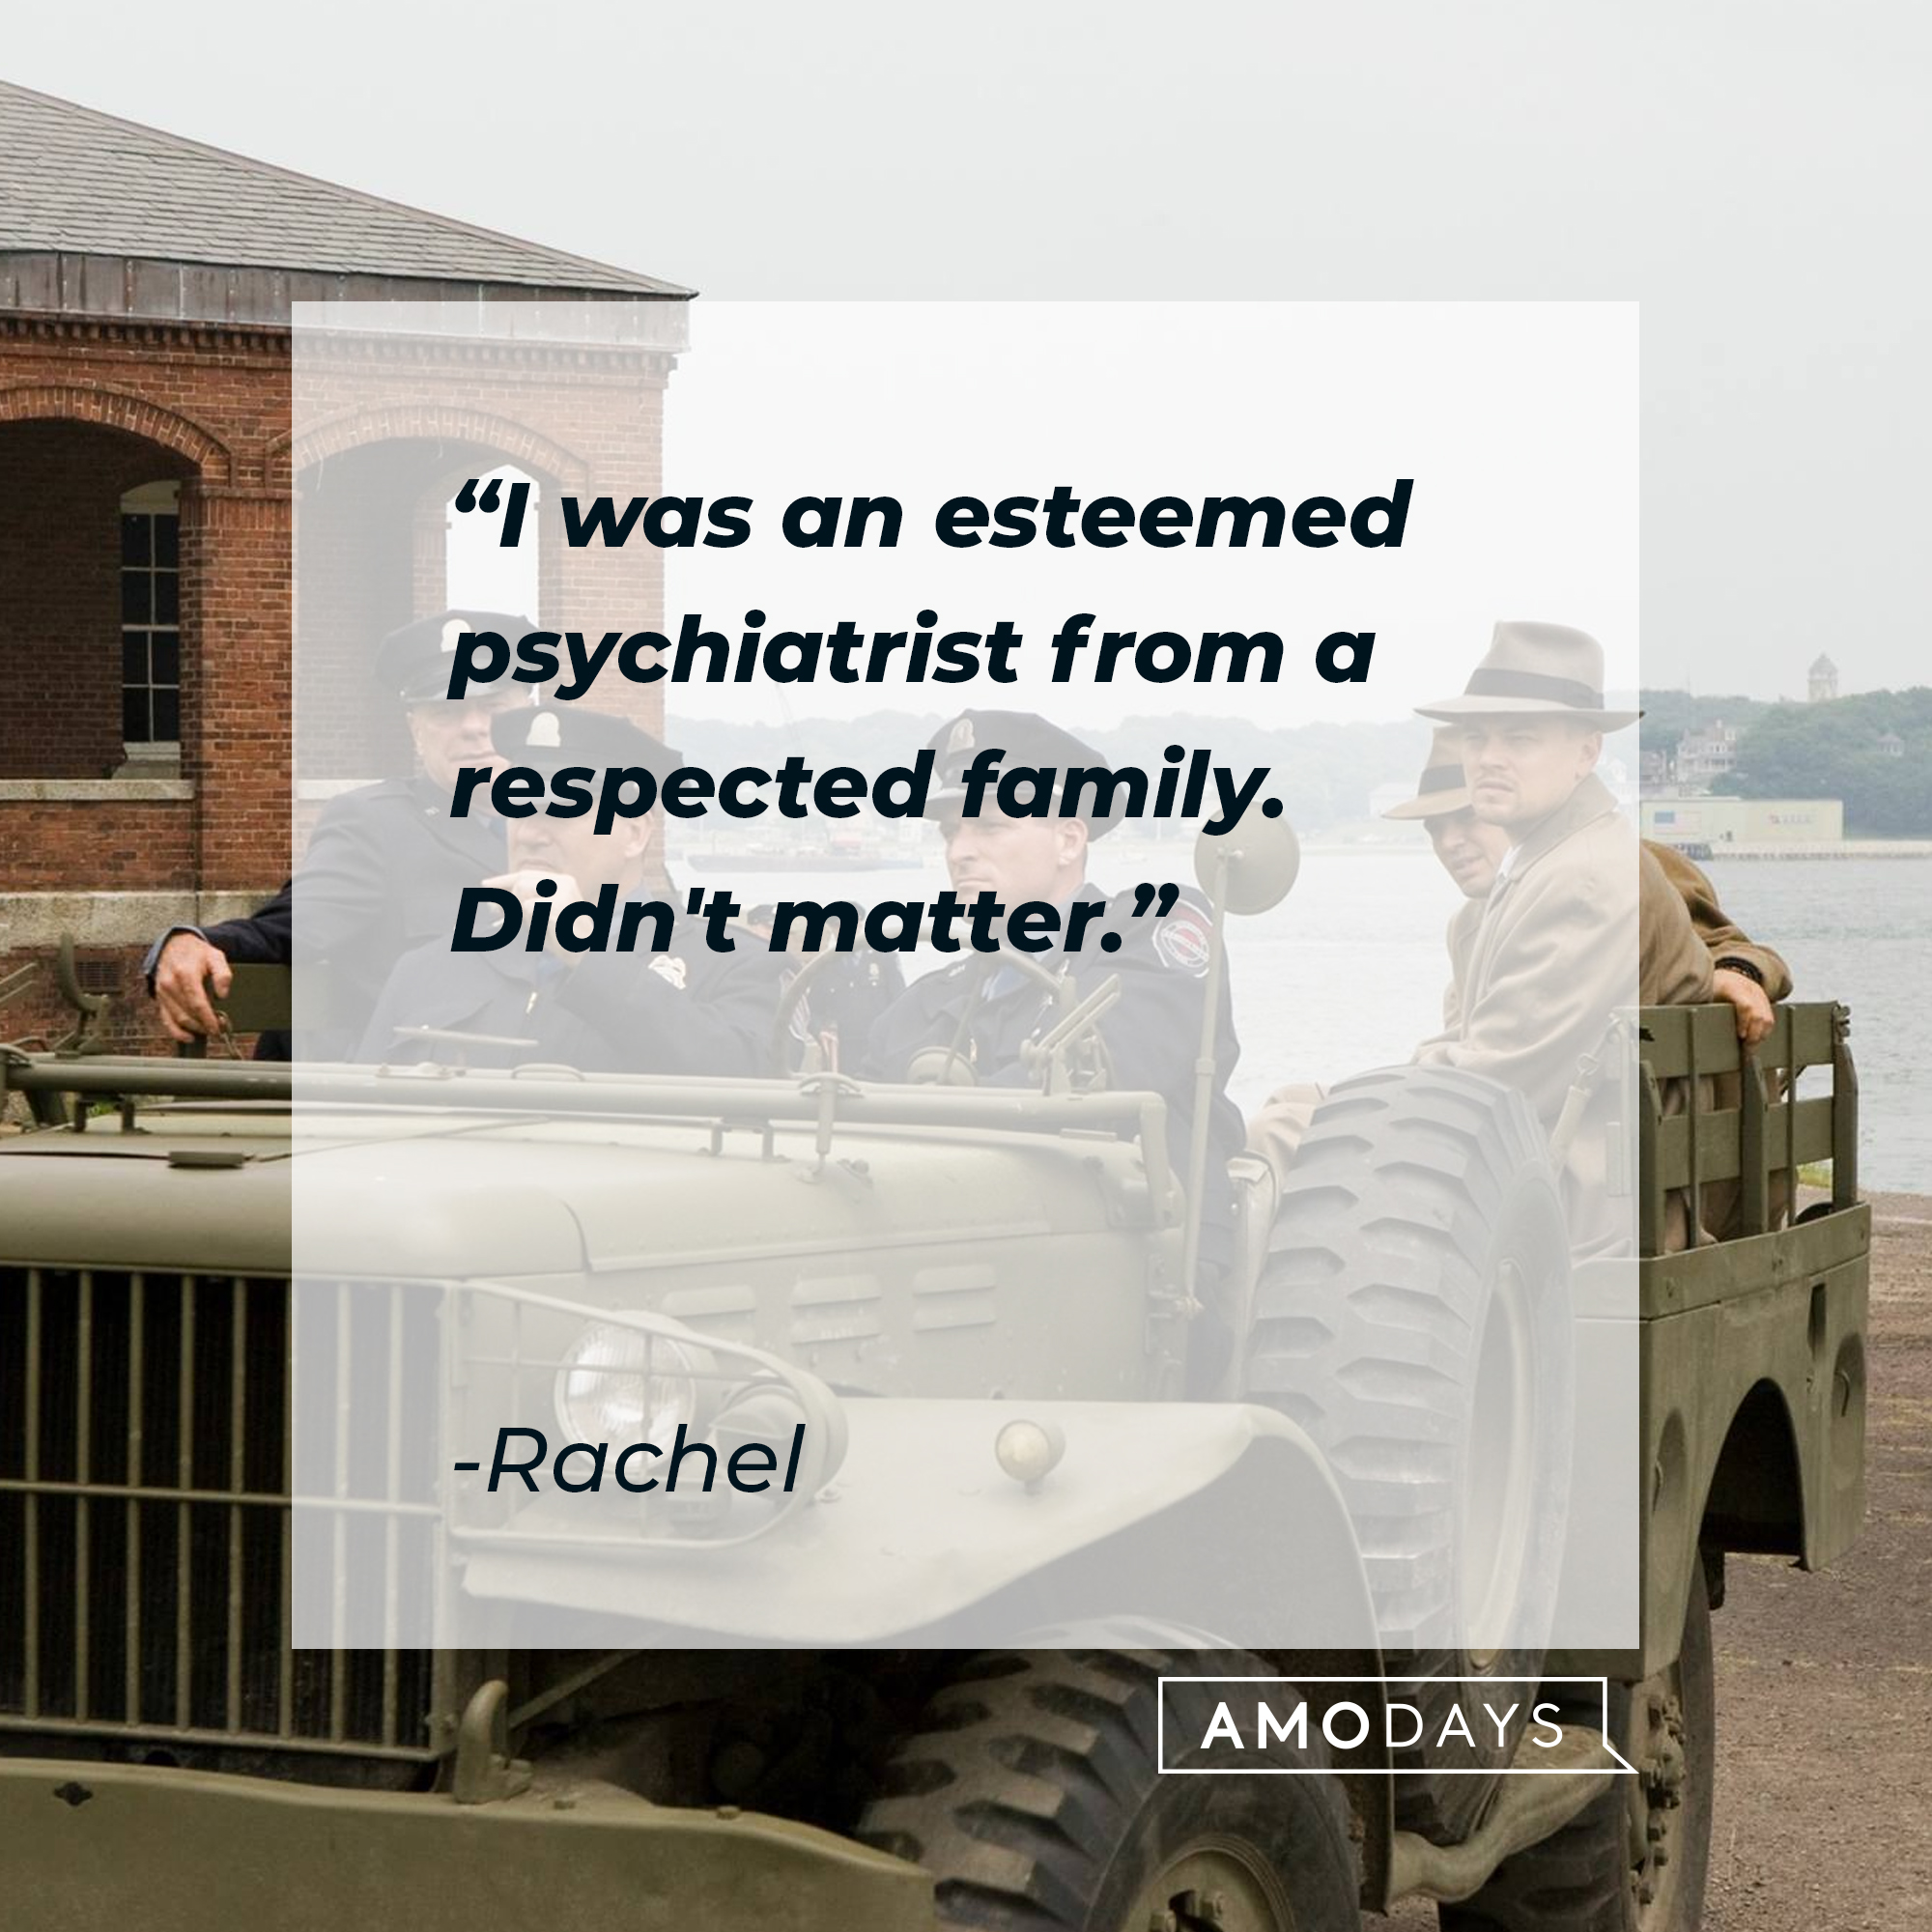 Rachel's quote: "I was an esteemed psychiatrist from a respected family. Didn't matter." | Source: facebook.com/ShutterIsland